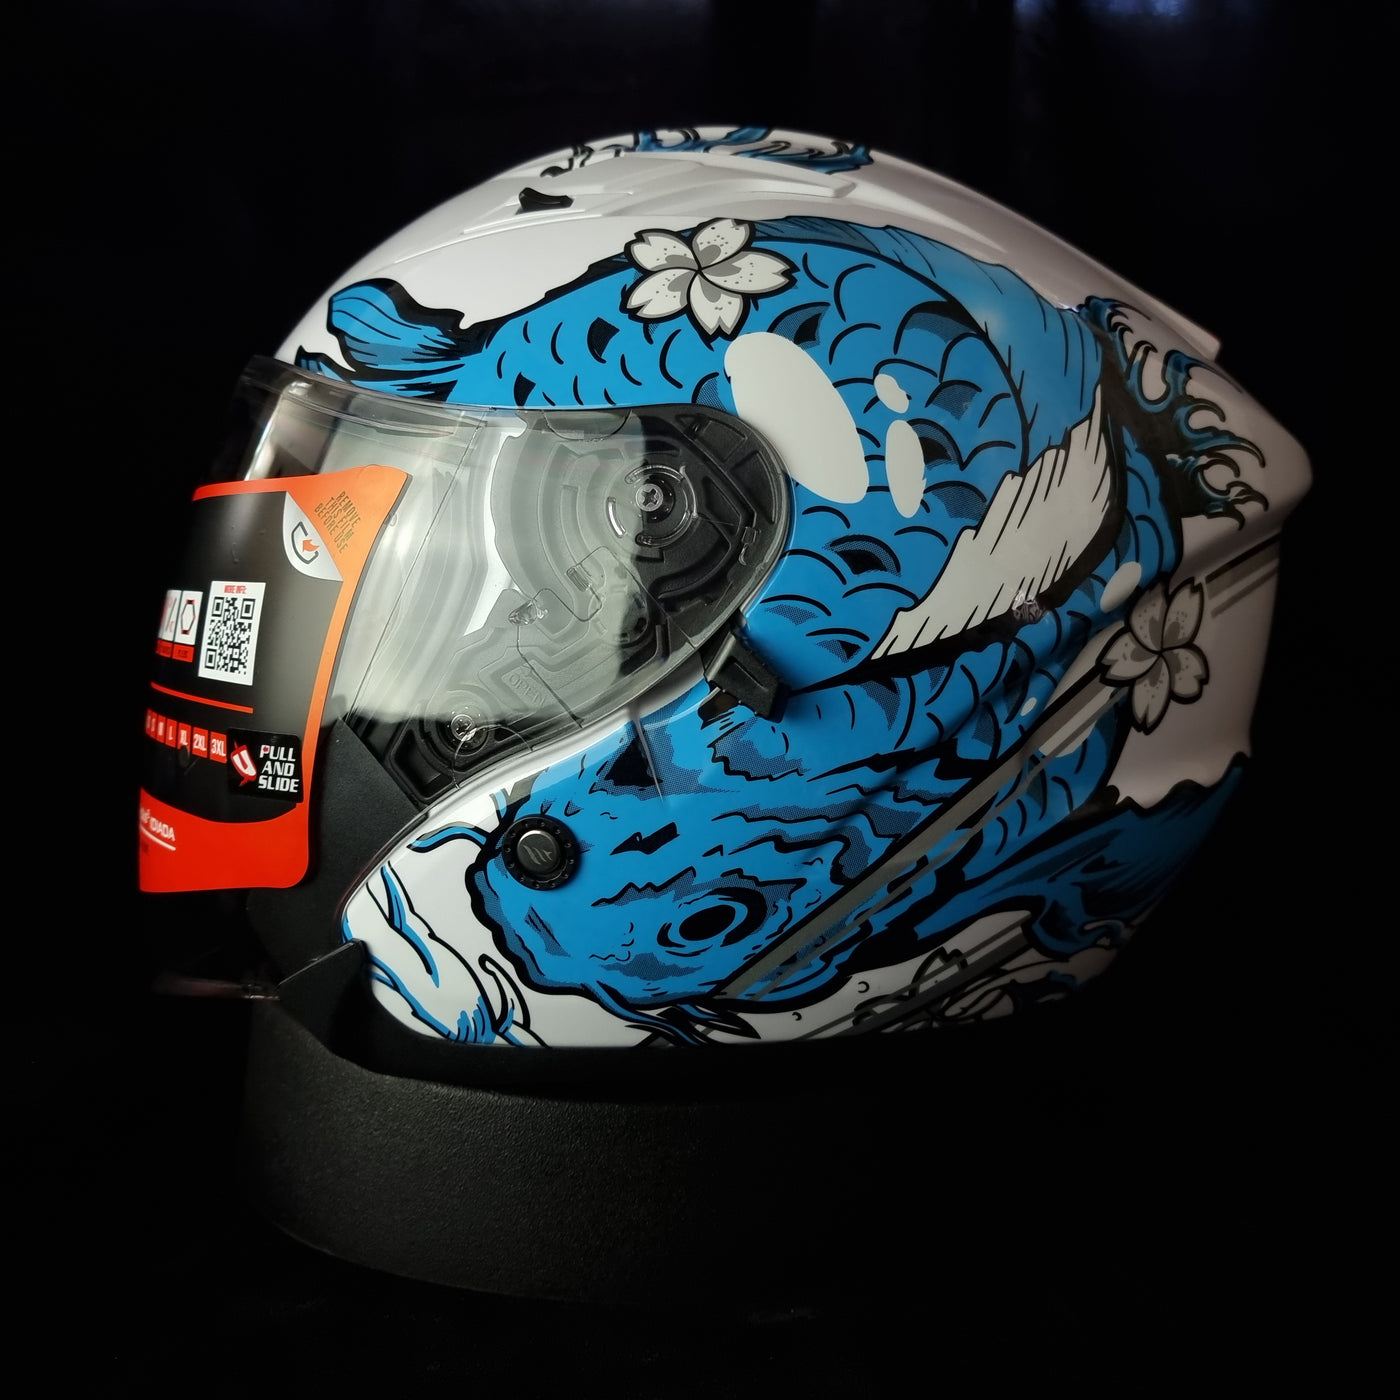 [Limited Edition] MT Helmets Avenue SV KRPA A0 Gloss Pearl White Helmet